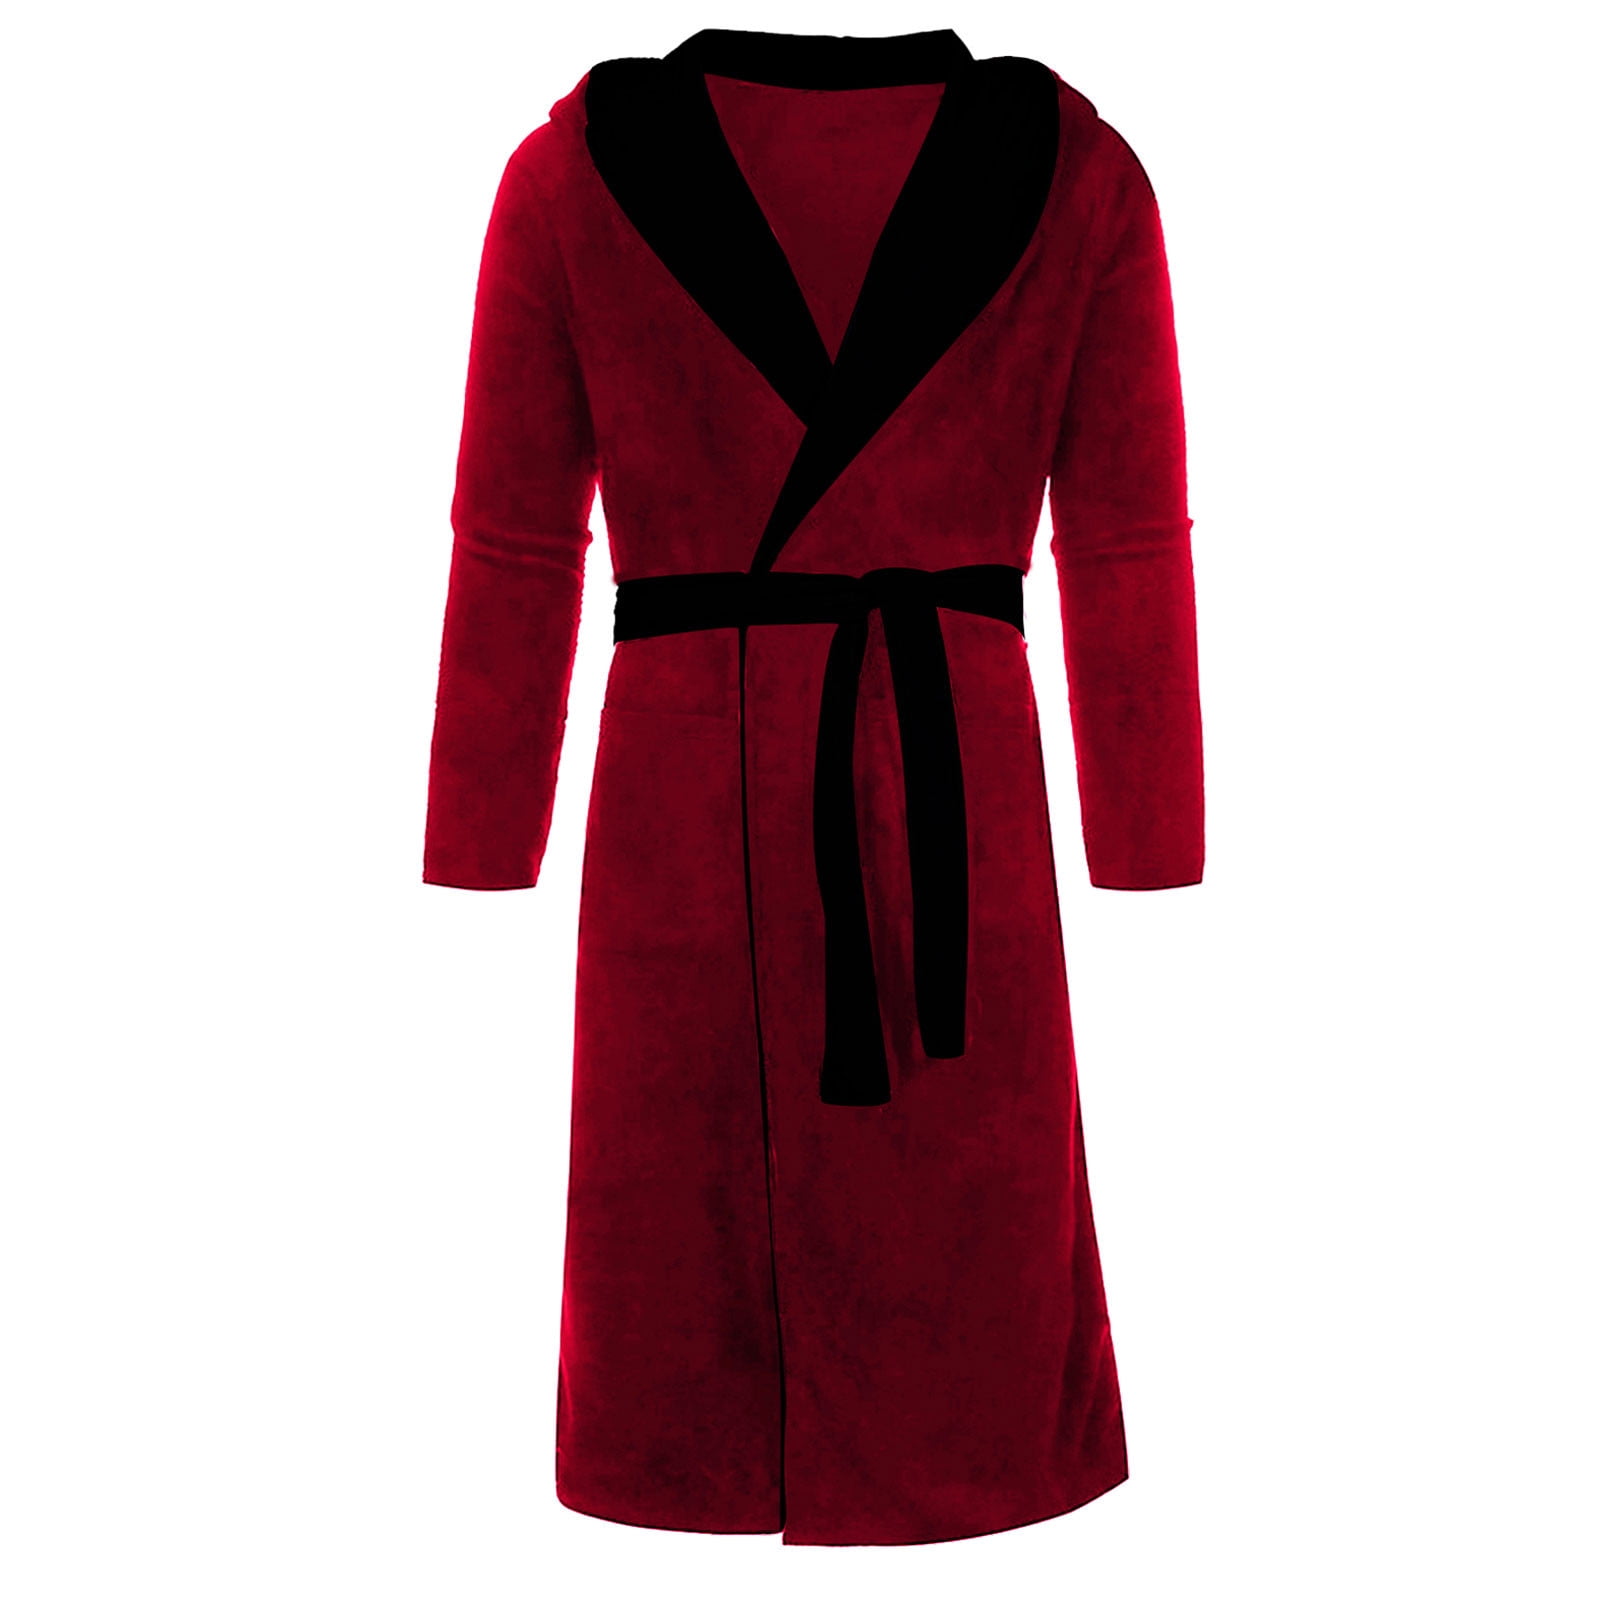 Betiyuaoe Robes for Men Long Sleeve Winter Lengthened Plush Shawl ...